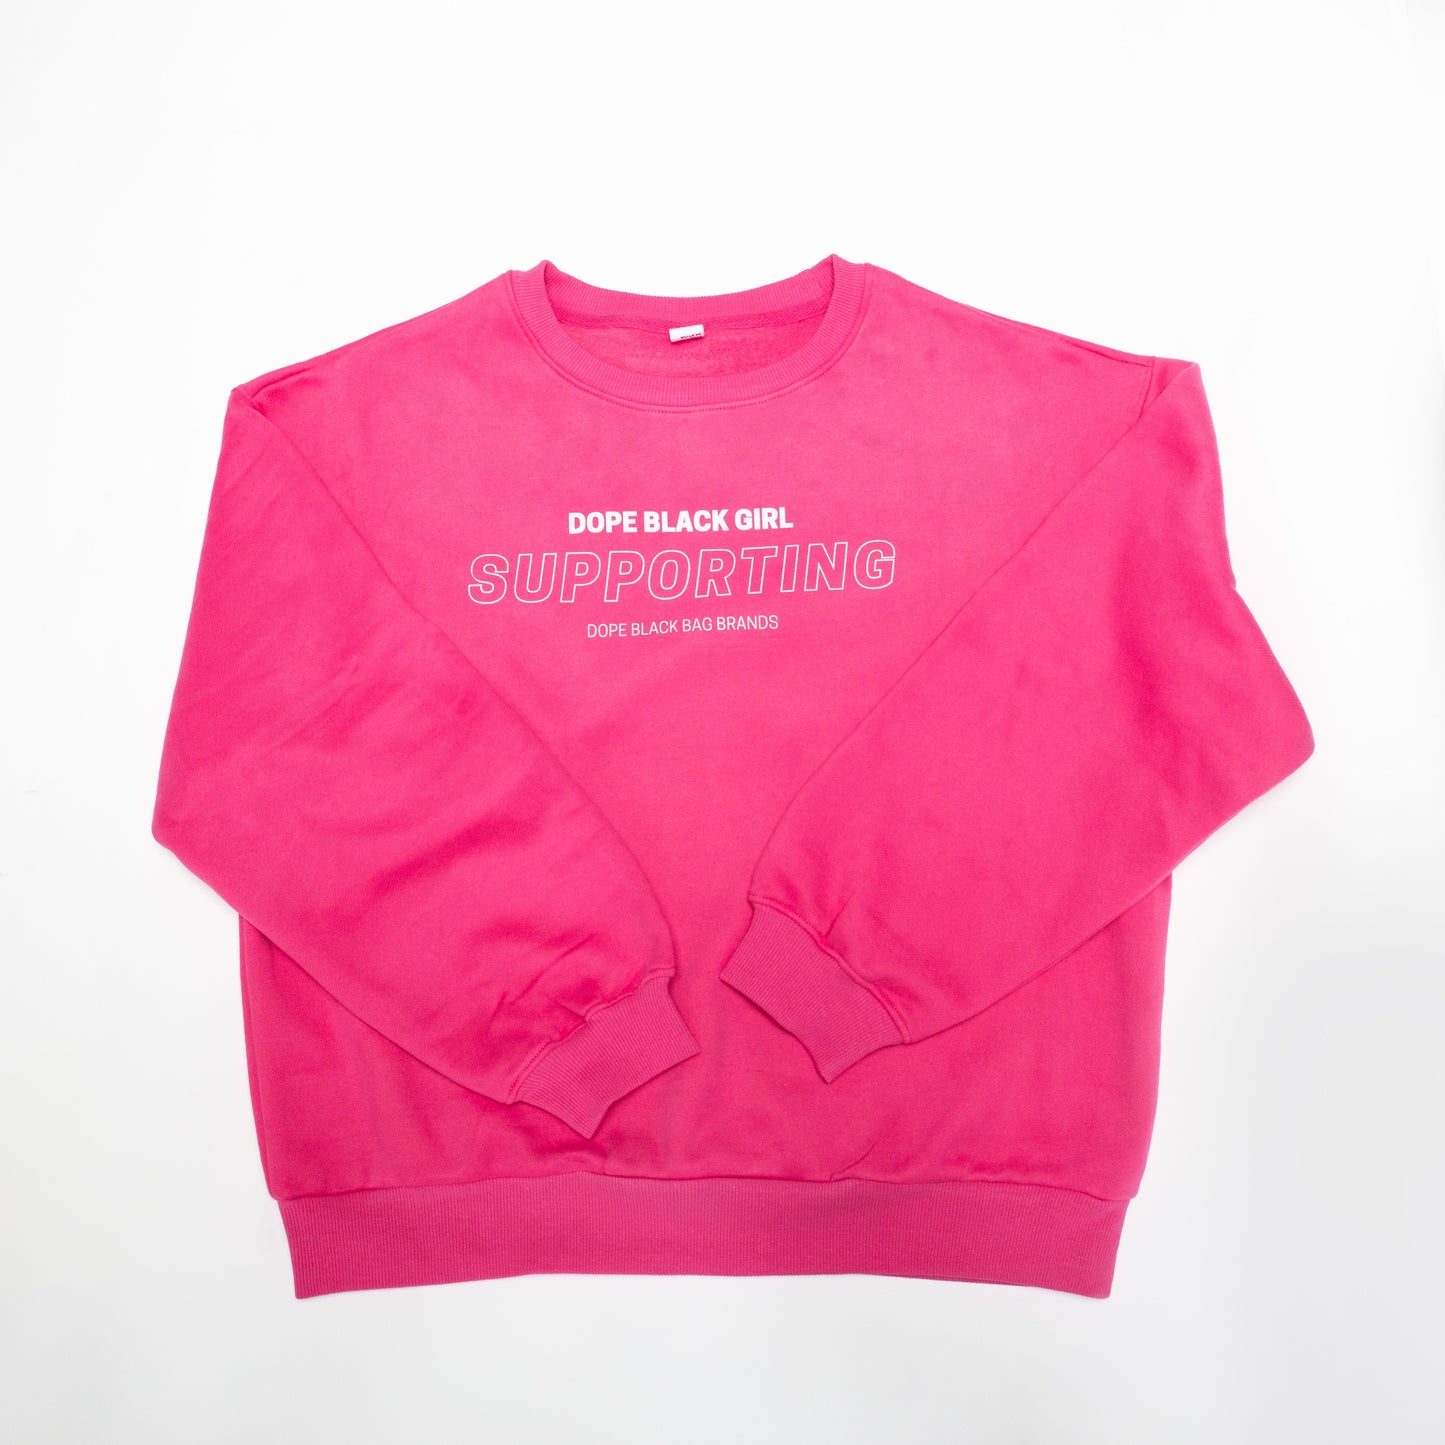 Dope Black Girl Supporting Sweatshirt - Pink